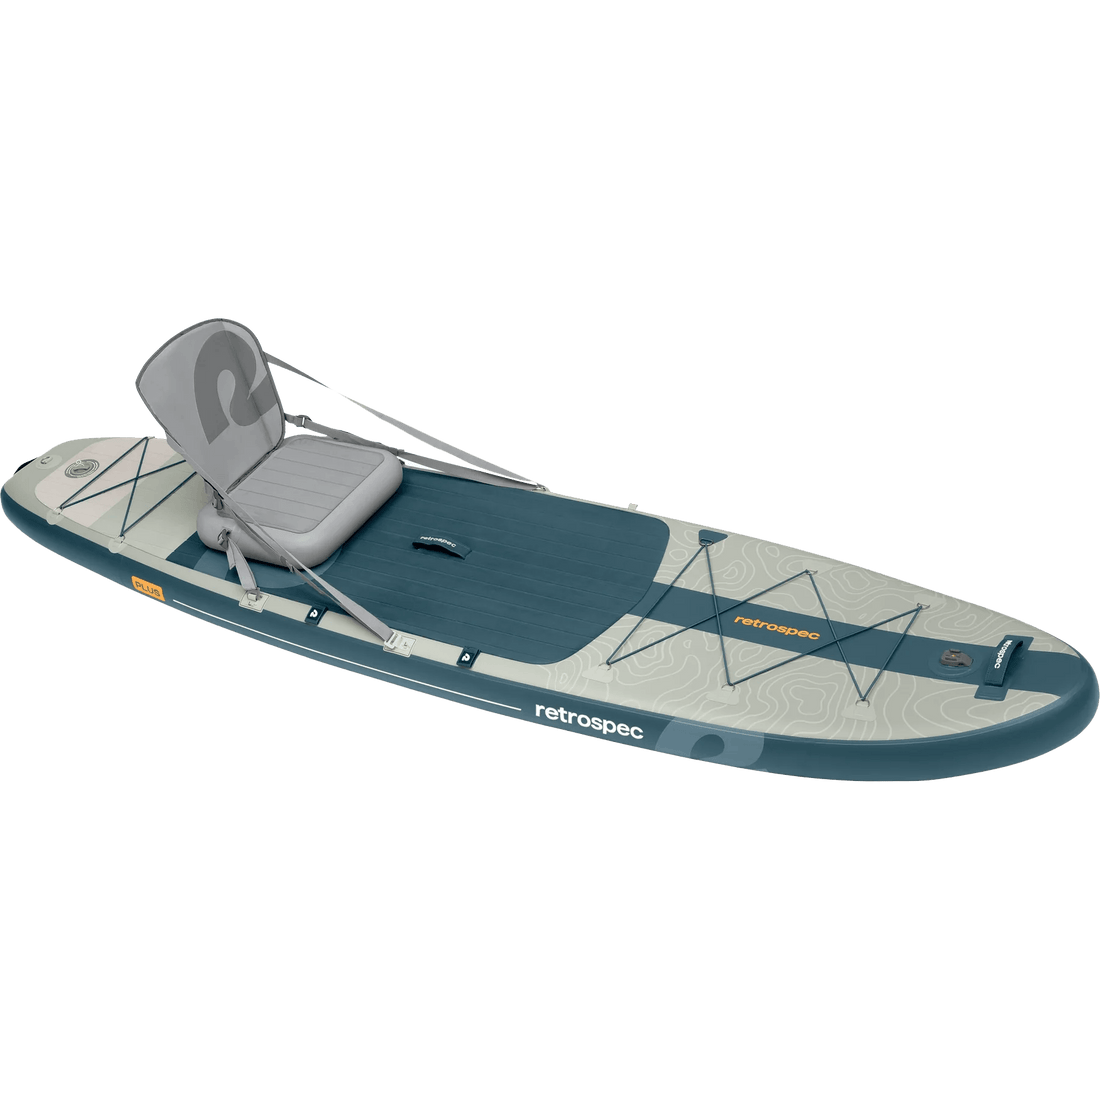 Retrospec Retrospec Weekender Plus 2 iSUP - River Rock Weekender 2 Inflatable Stand Up Paddle Board 10’6”